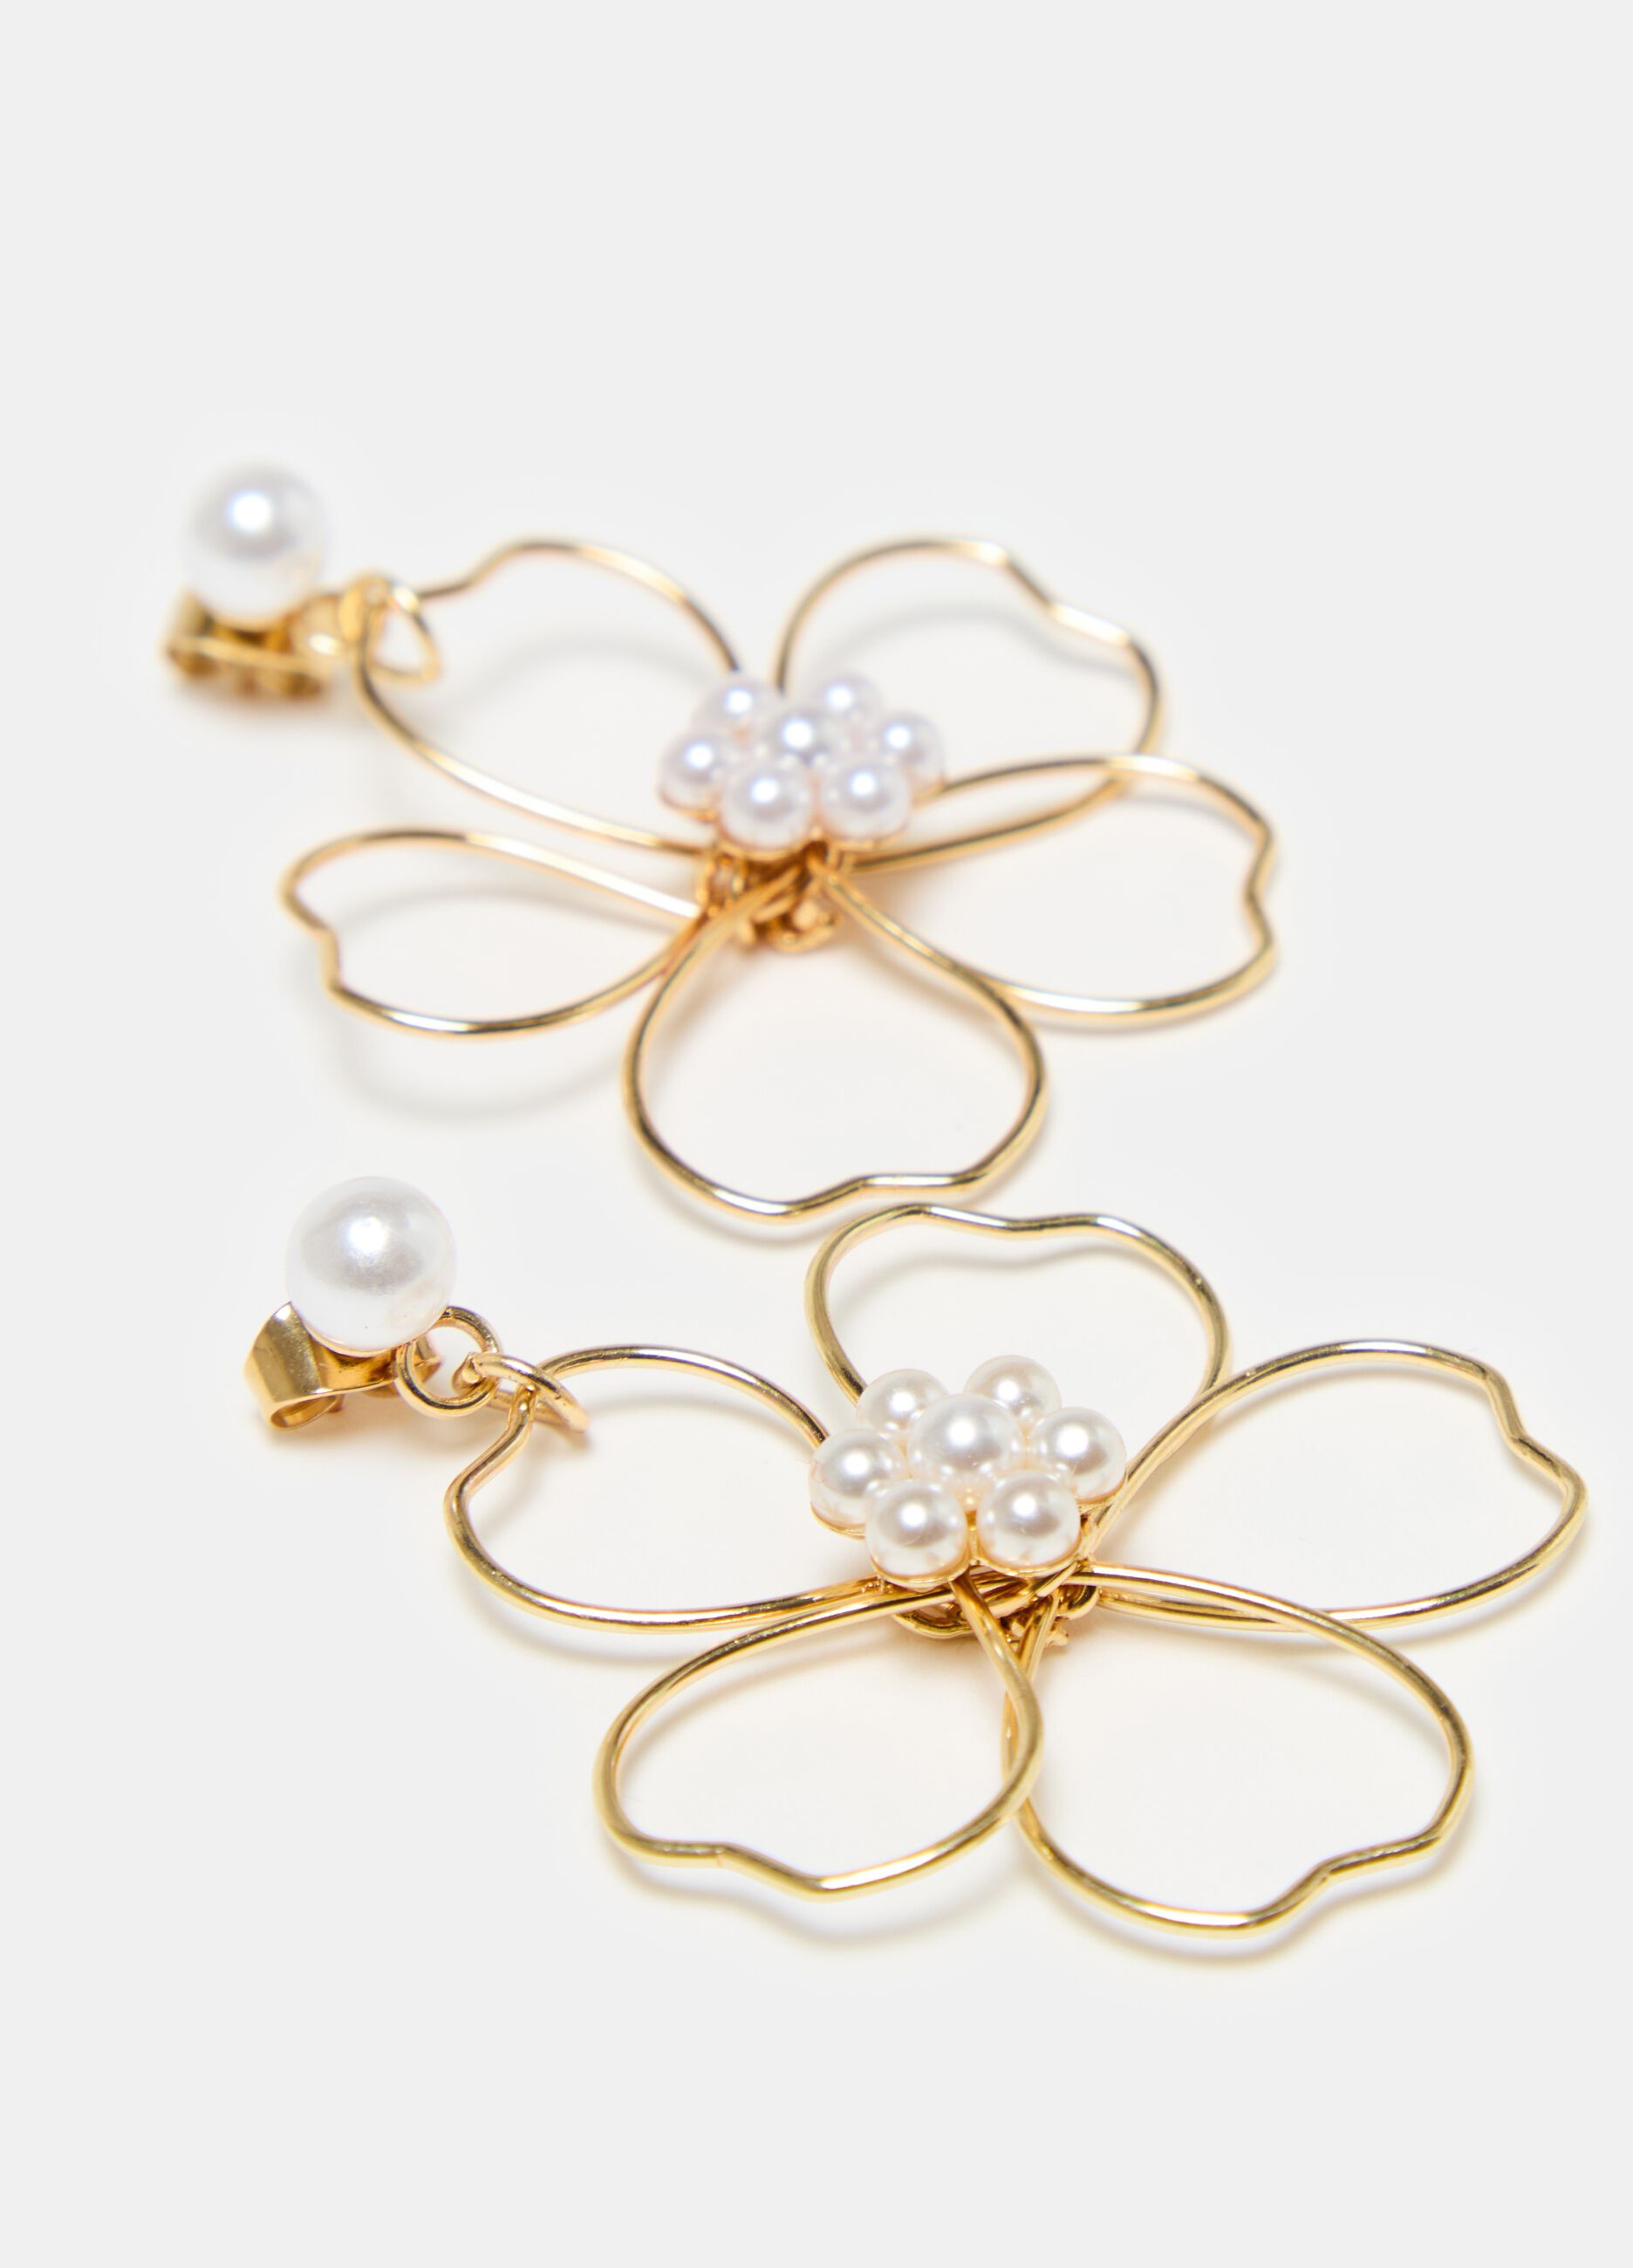 Flower earrings with pearls